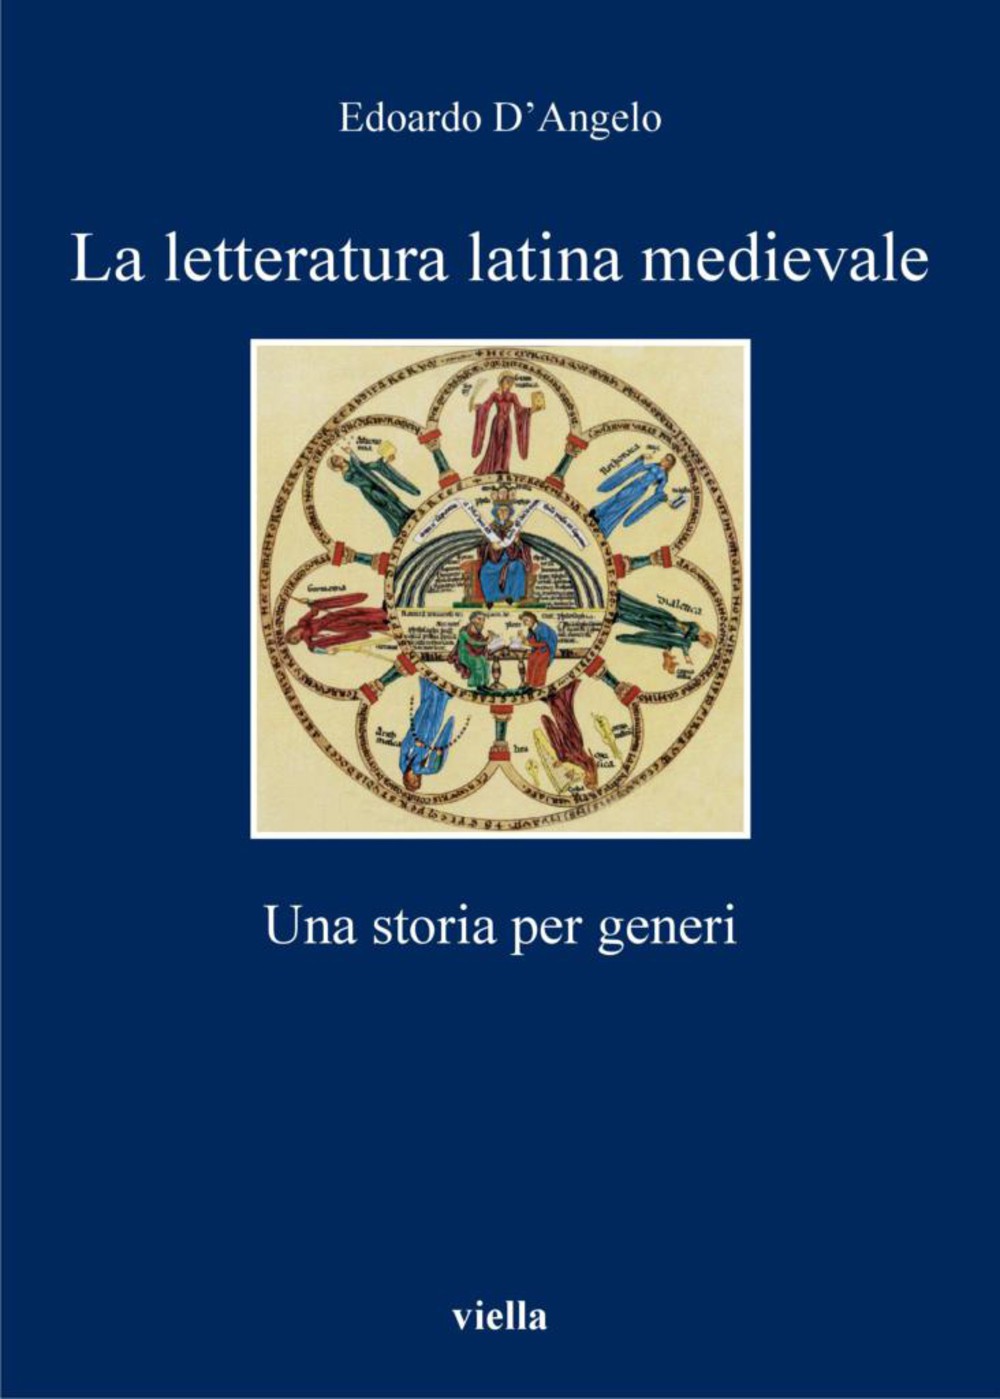 La letteratura latina medievale - Librerie.coop